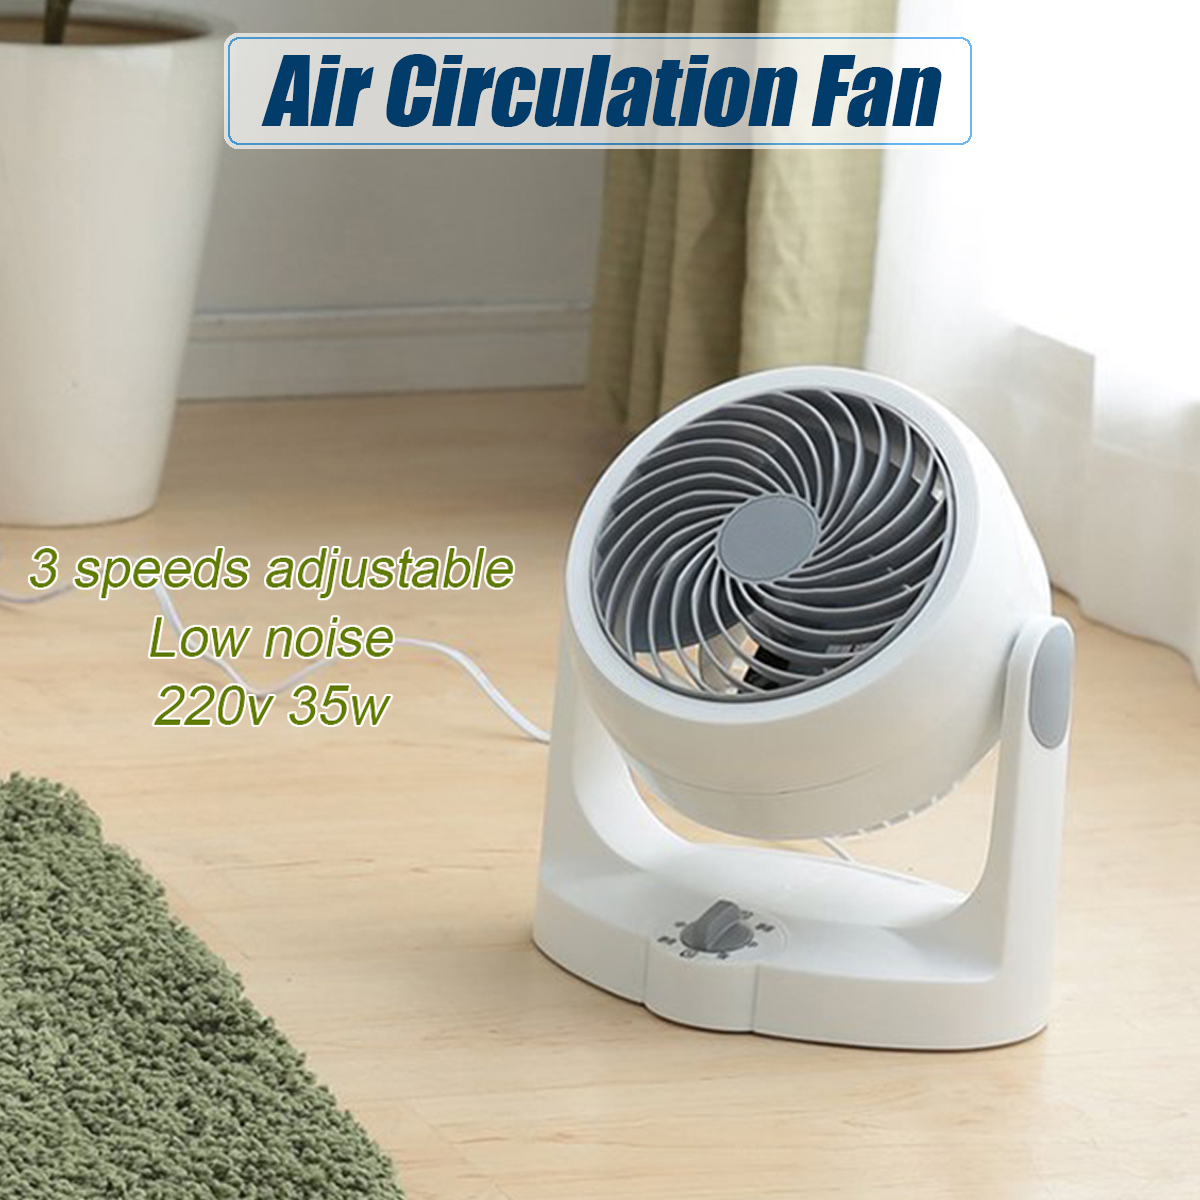 Air-Circulator-Fan-Cooler-Quiet-Silent-Mini-Portable-Home-Office-3-Speeds-220v-35w-1462908